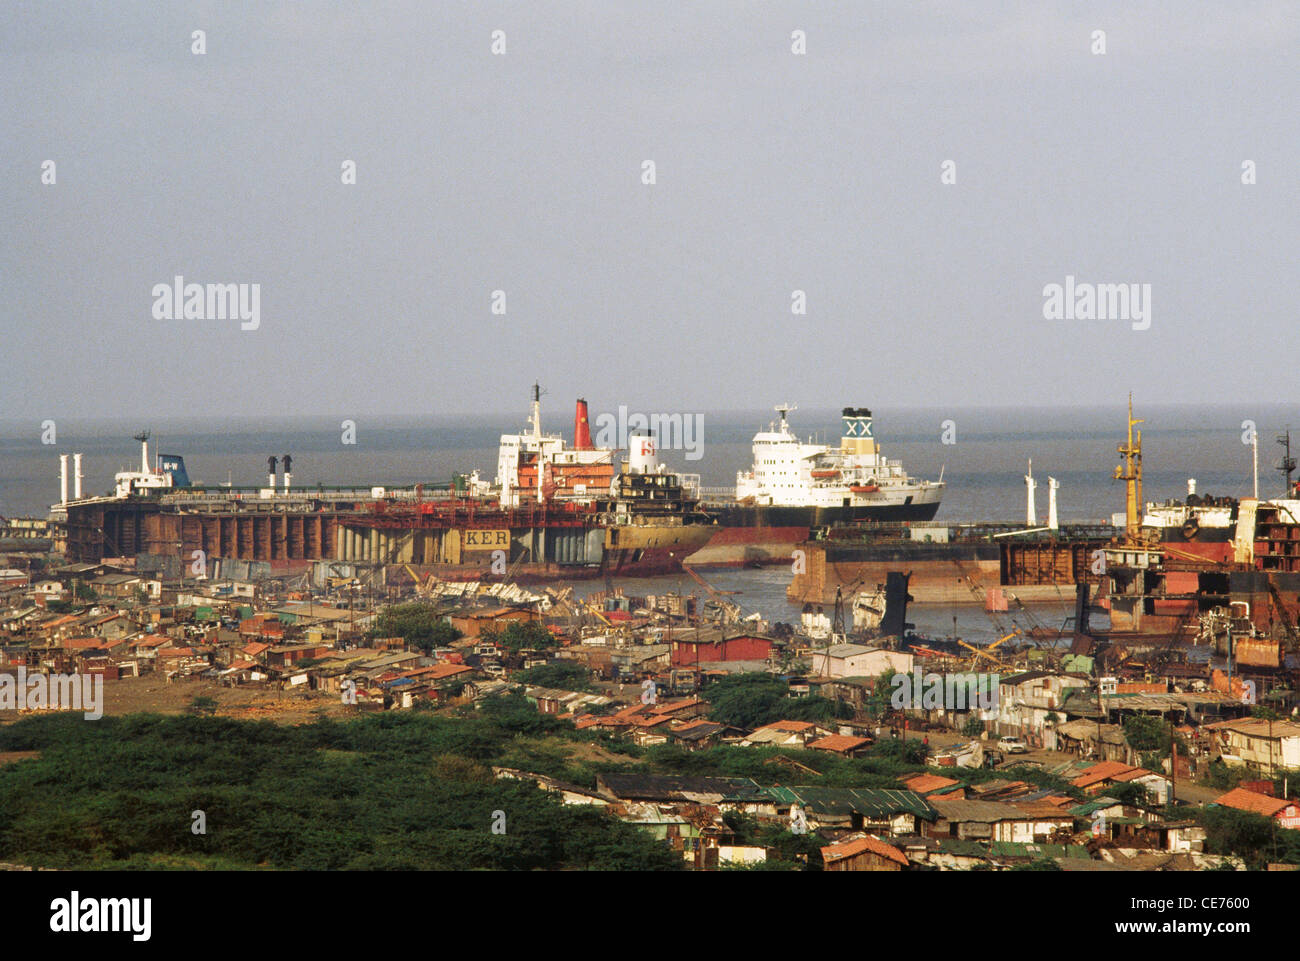 Alang ship breaking scrap yard ; ship graveyard ; Alang ; Bhavnagar ; Gujarat ; India ; Asia ; dpa 83111 rva Stock Photo